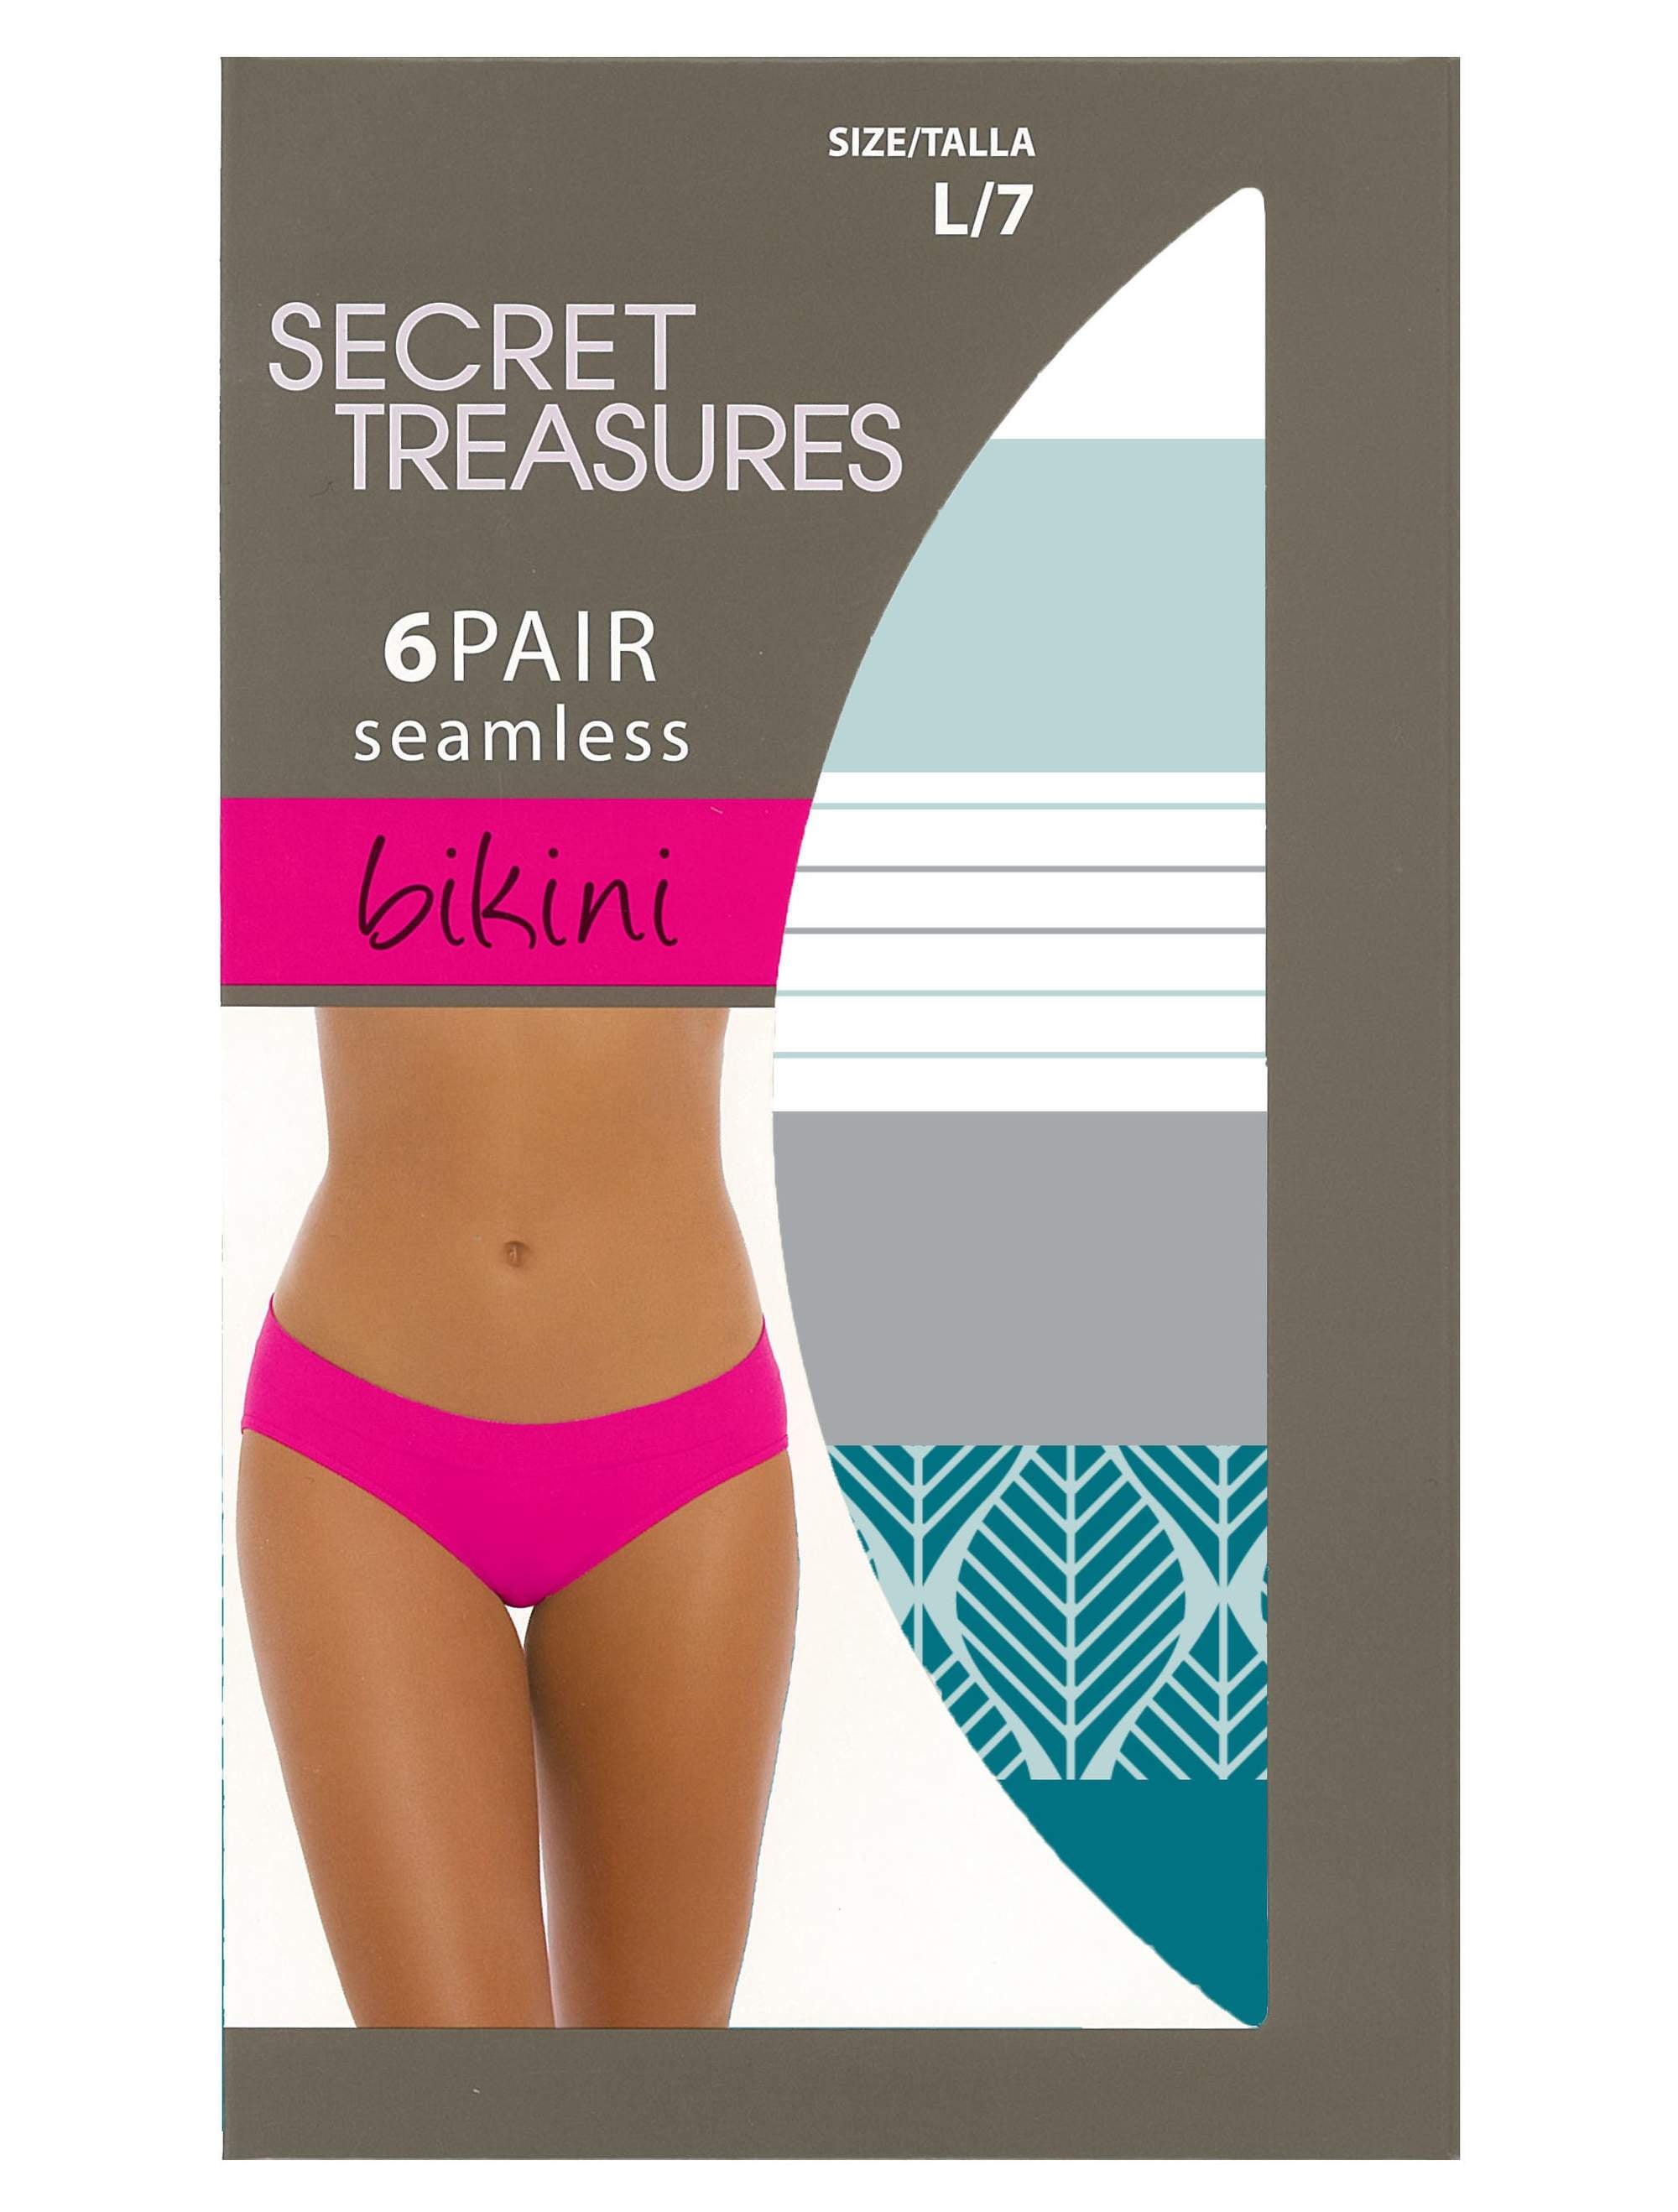 Secret Treasures Seamless Women's Brief Panties, 6-Pack